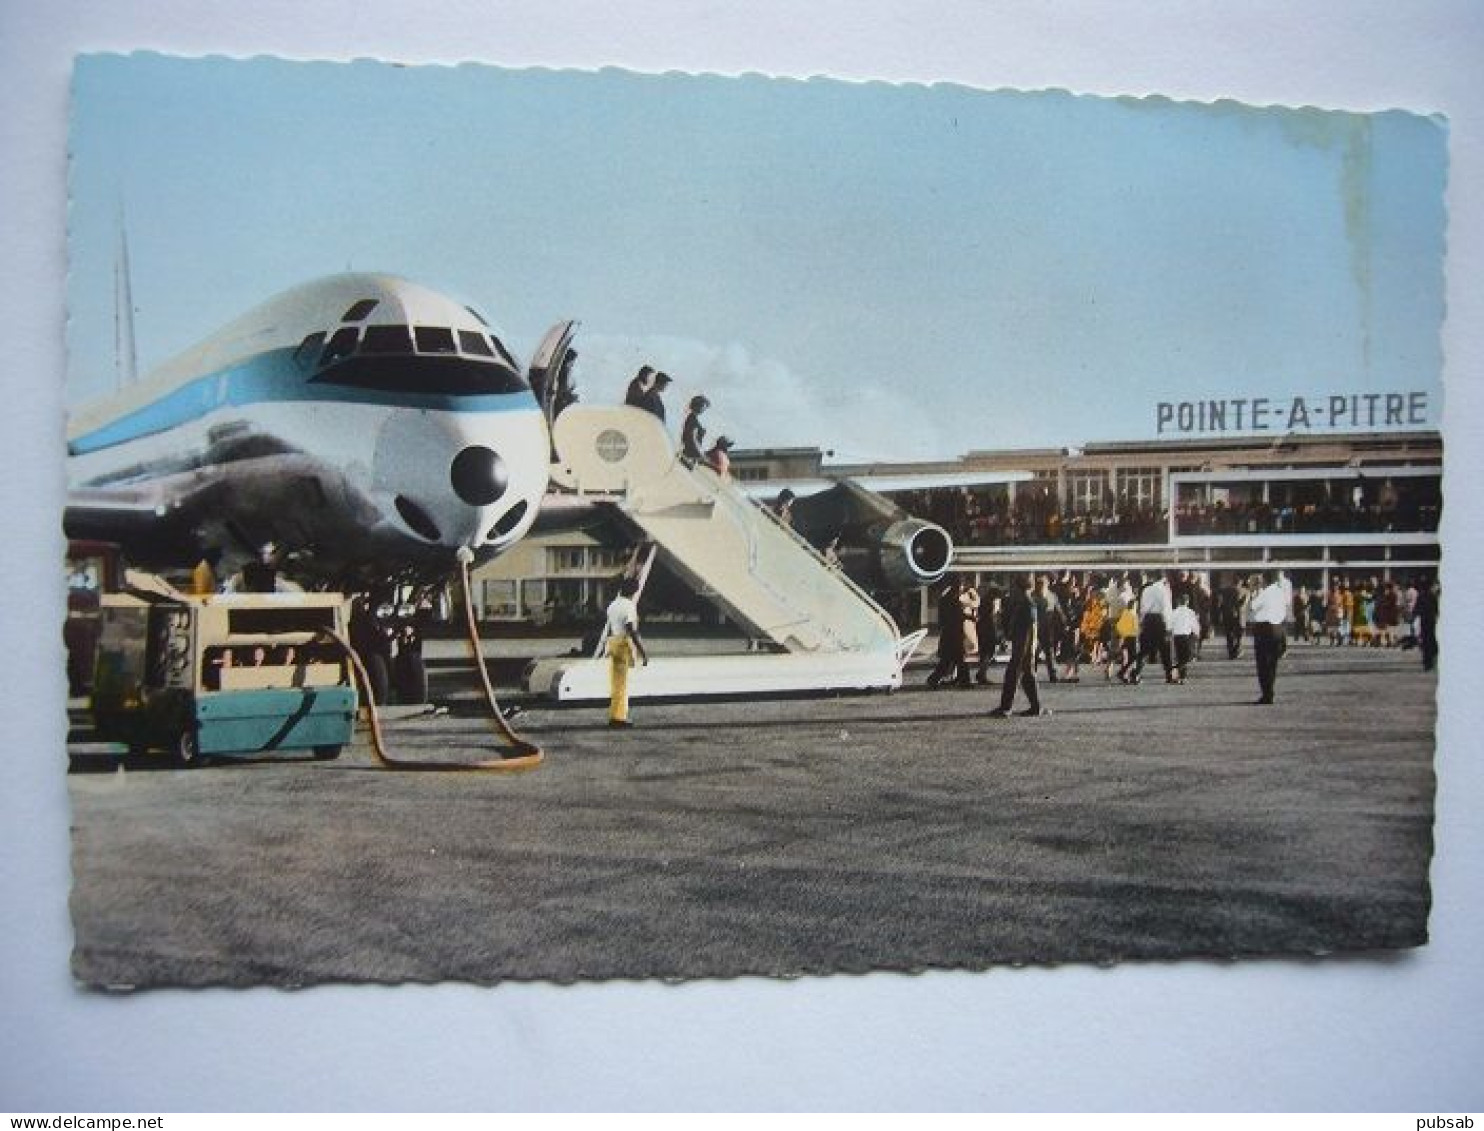 Avion / Airplane / PAN AM - PAN AMERICAN AIRWAYS / DC-8 / Seen At Raizet Airport, Pointe-à-Pitre - Guadeloupe - Aerodrome